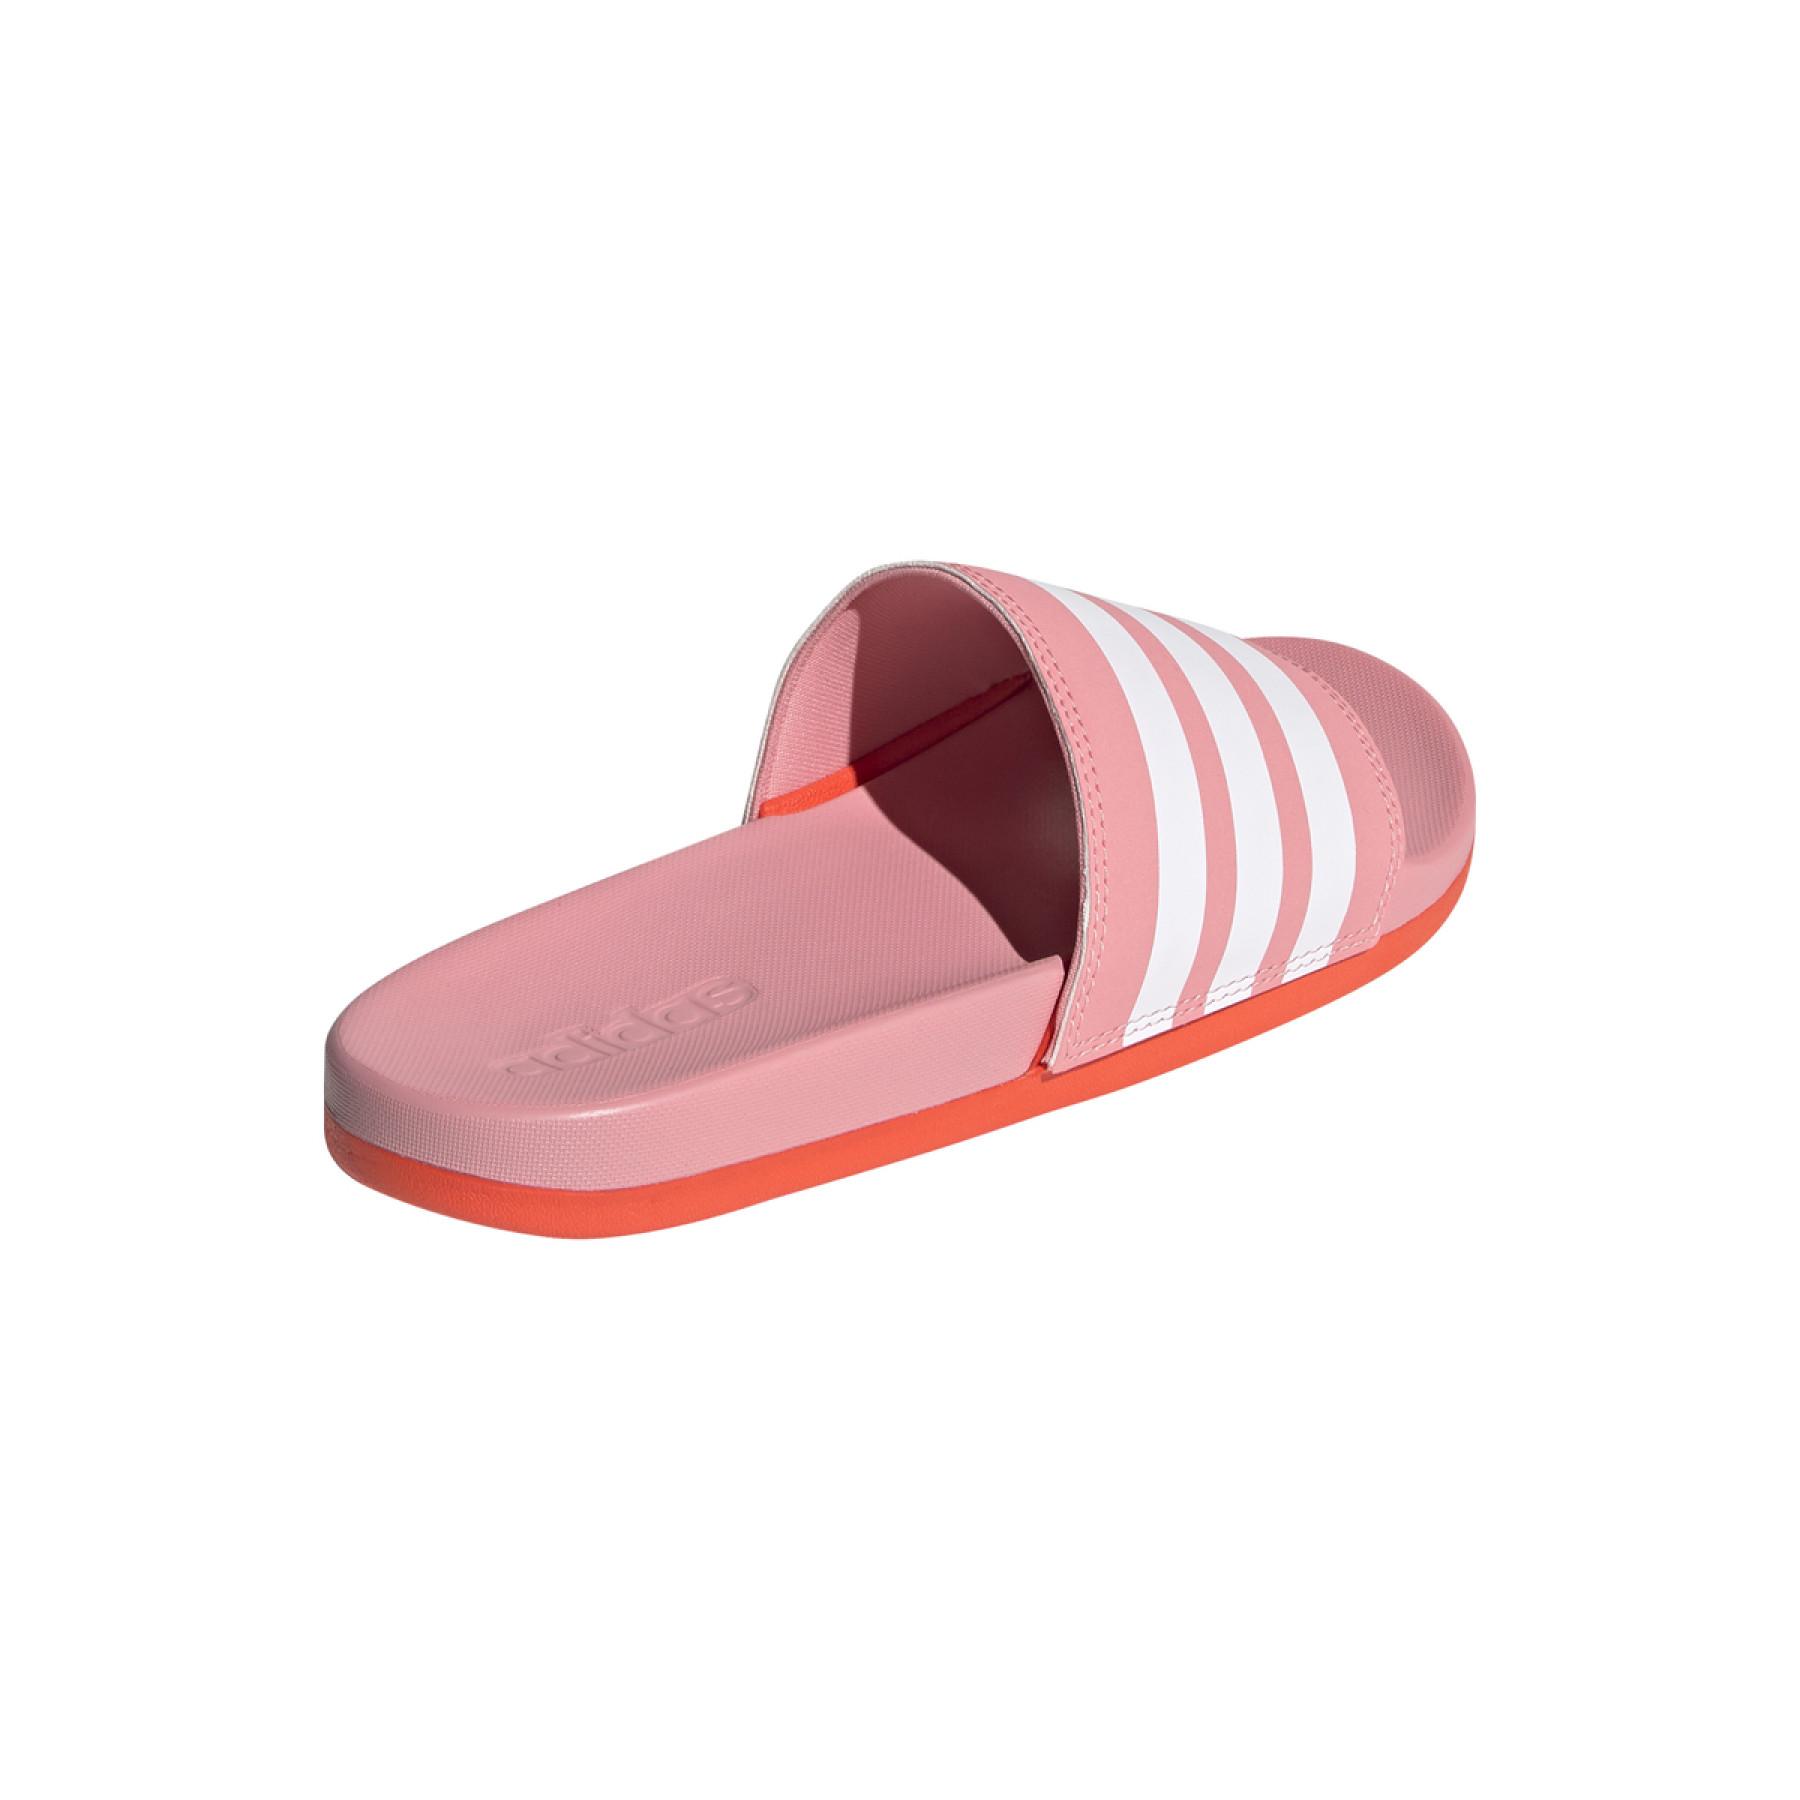 Women's flip-flops adidas Adilette Comfort